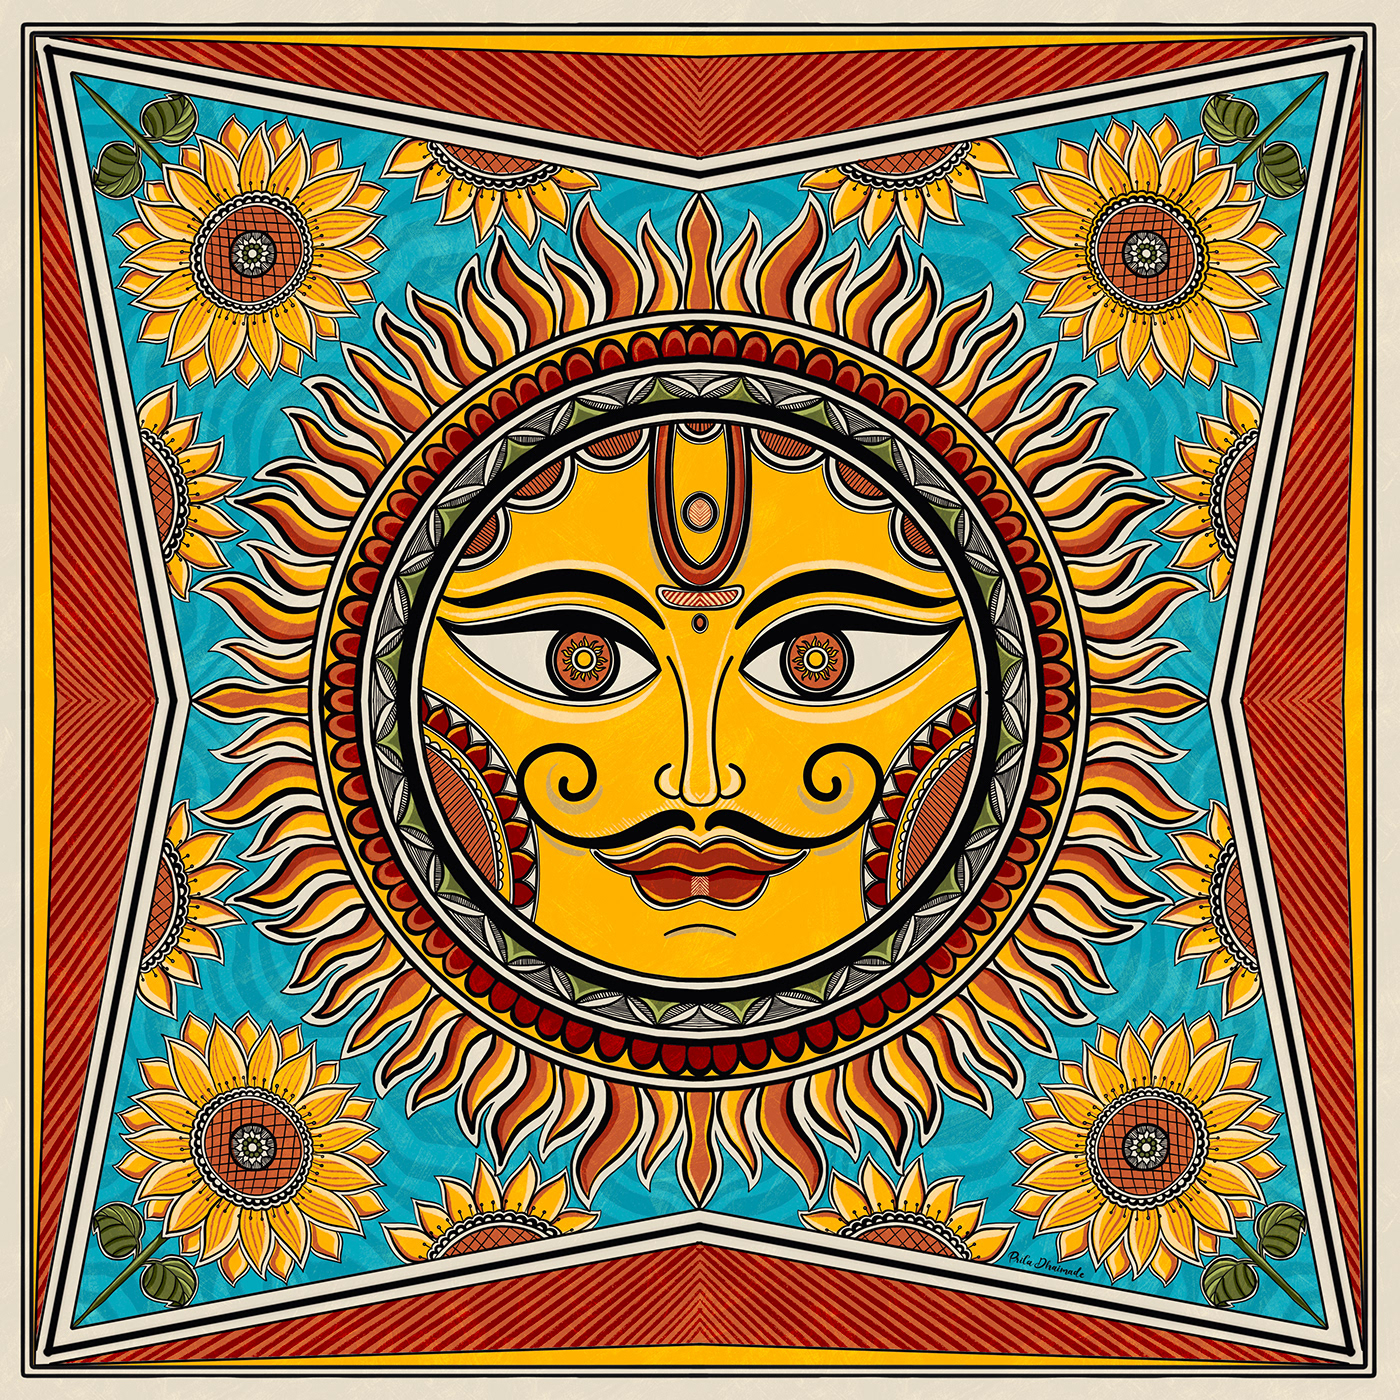 Ethnic folk art graphic illustration Indian art Indian folk art madhubani traditionally vivid